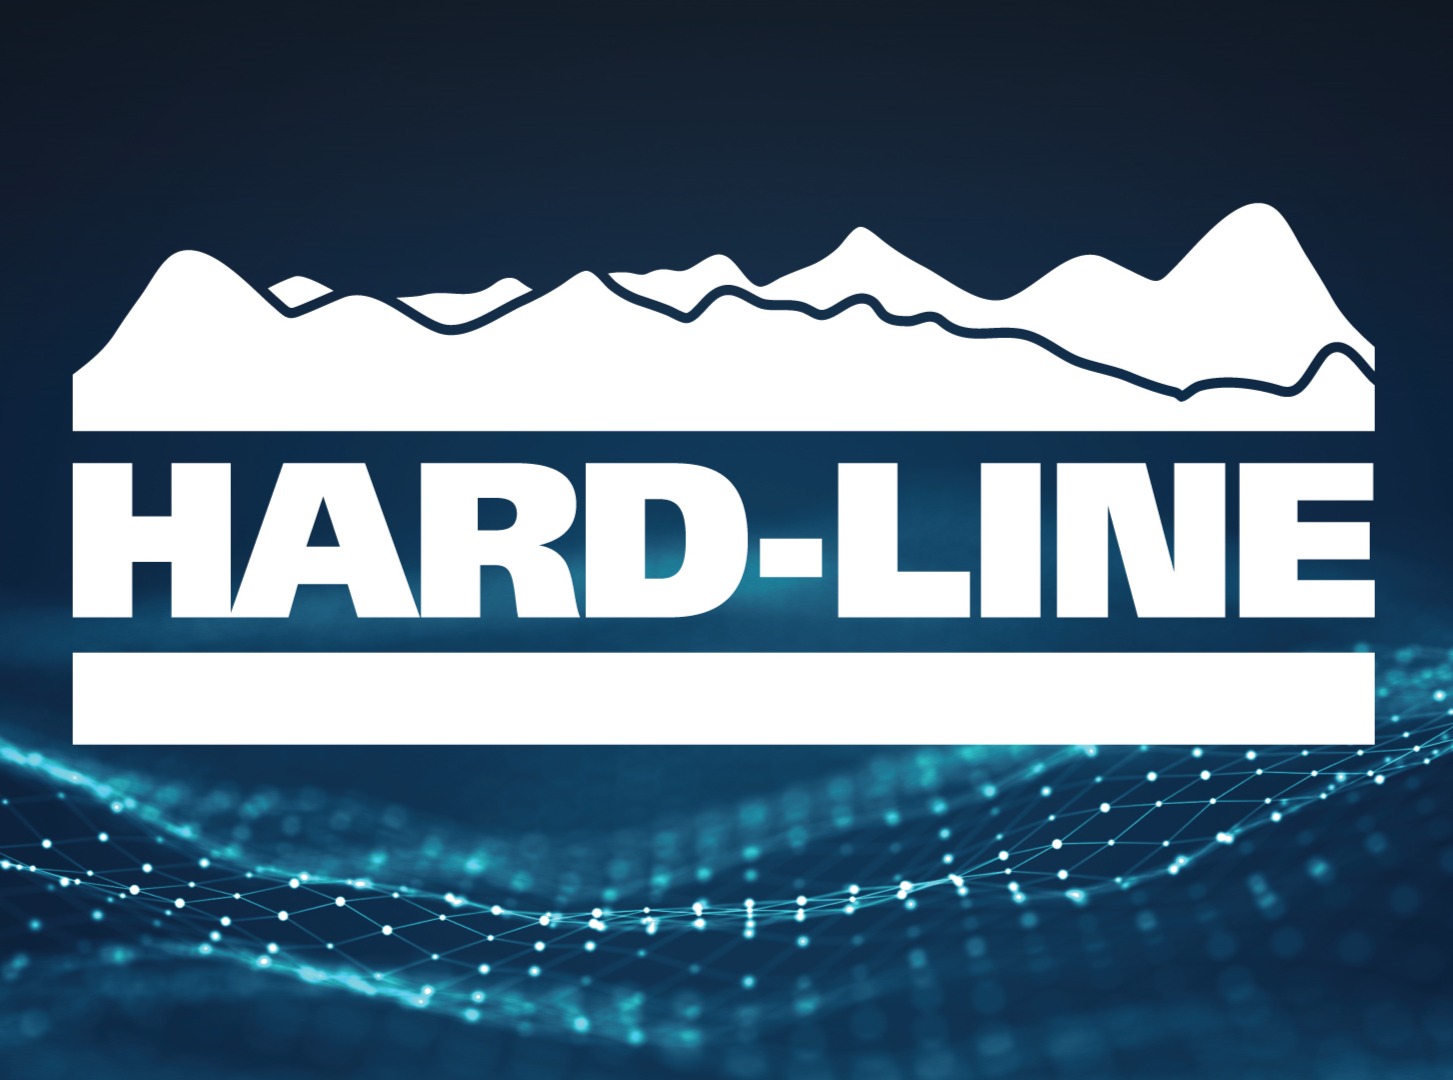 HARD-LINE